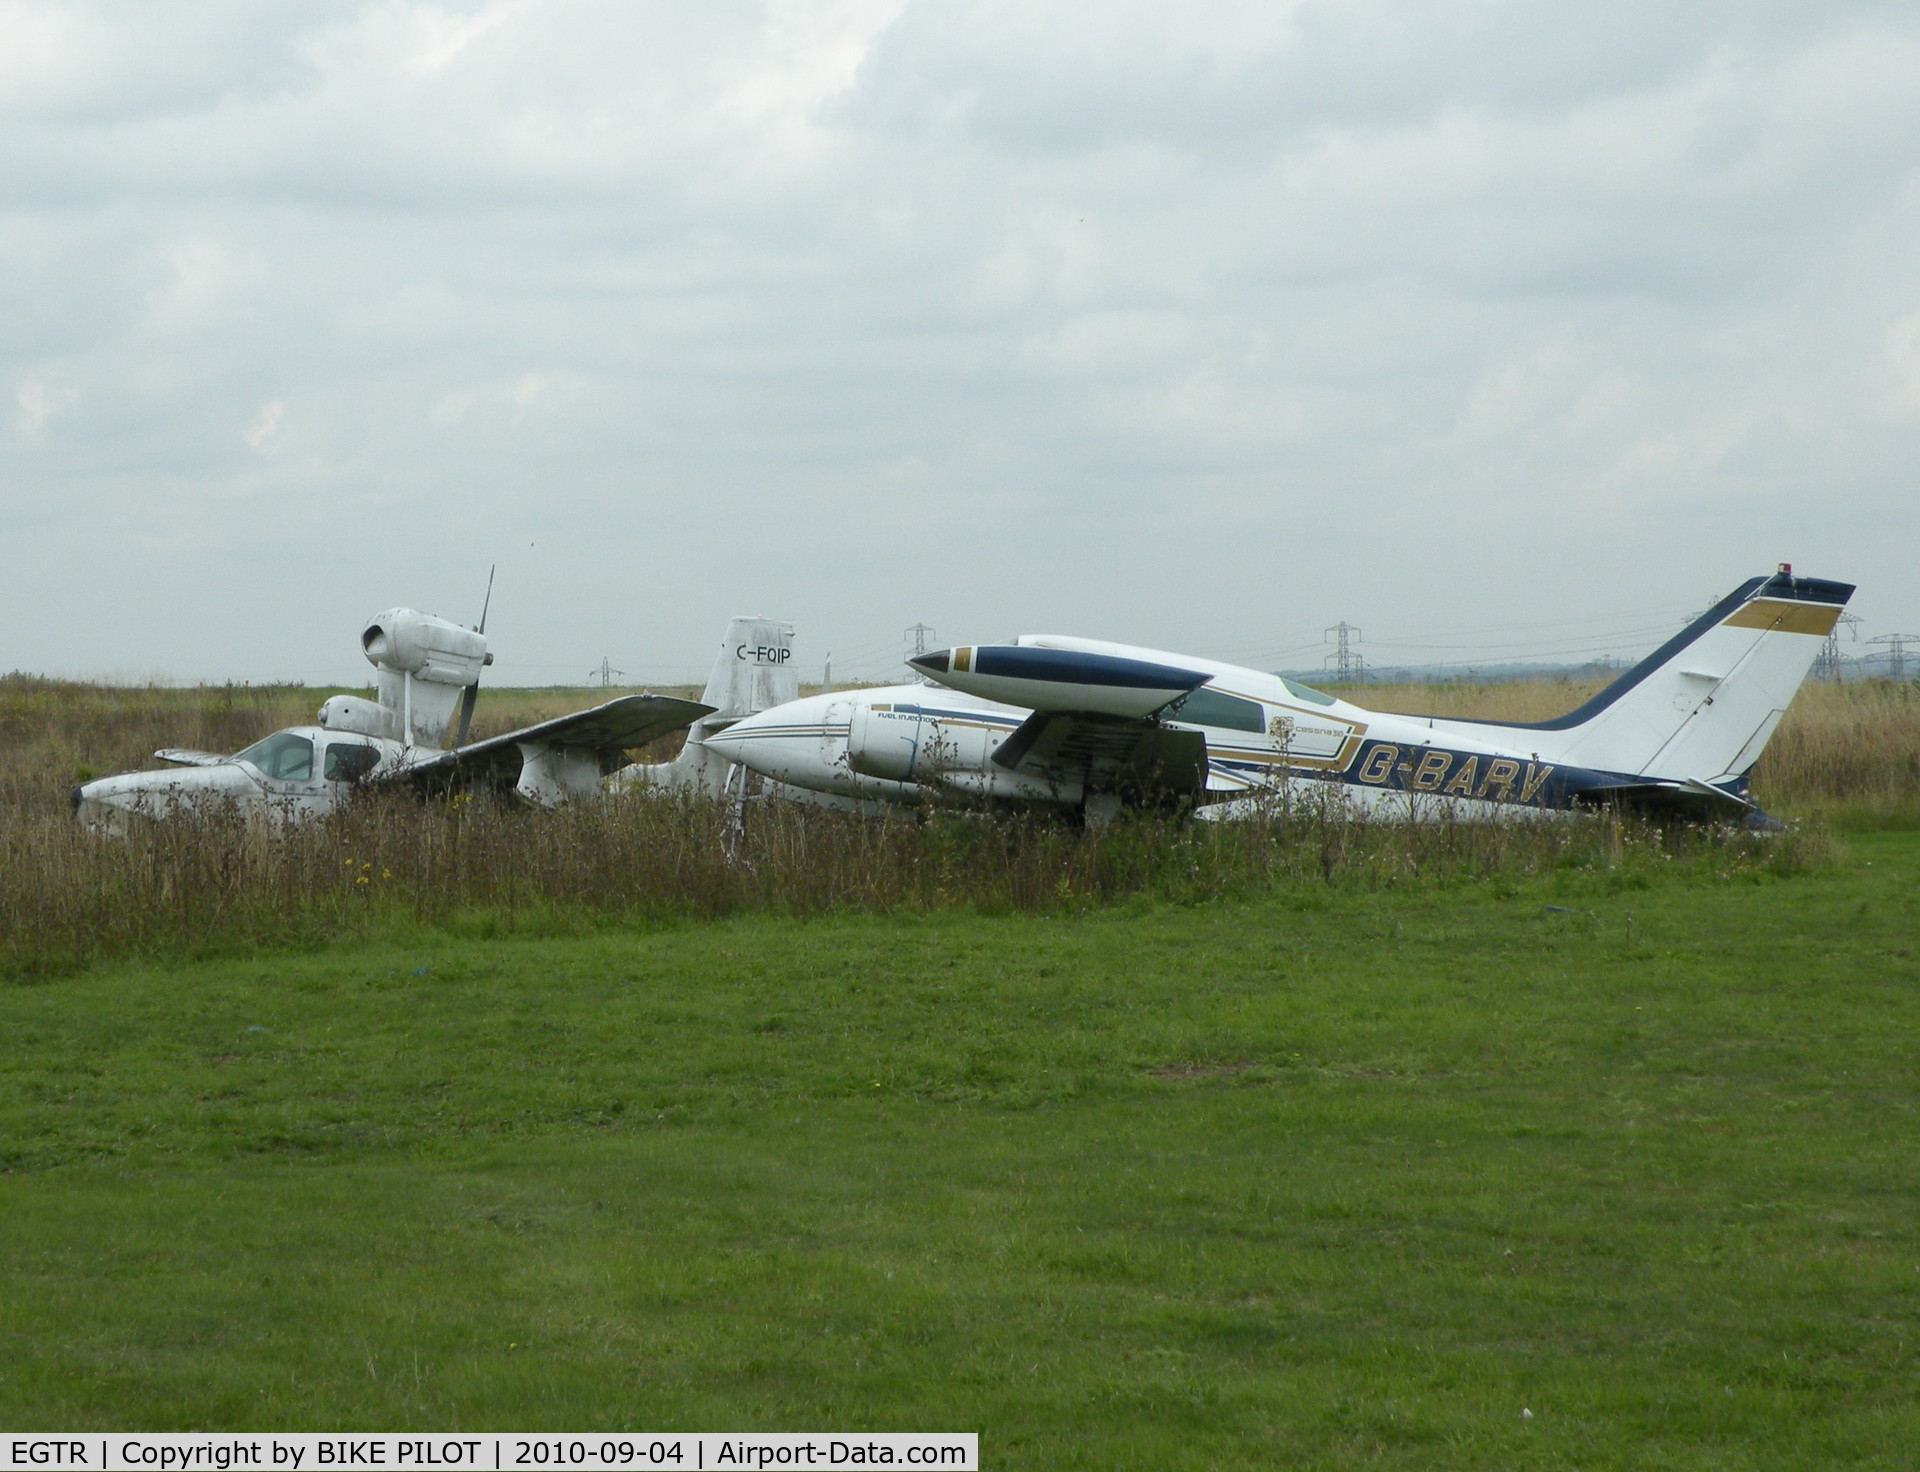 Elstree Airfield Airport, Watford, England United Kingdom (EGTR) - Derelict aircraft western end of airfield